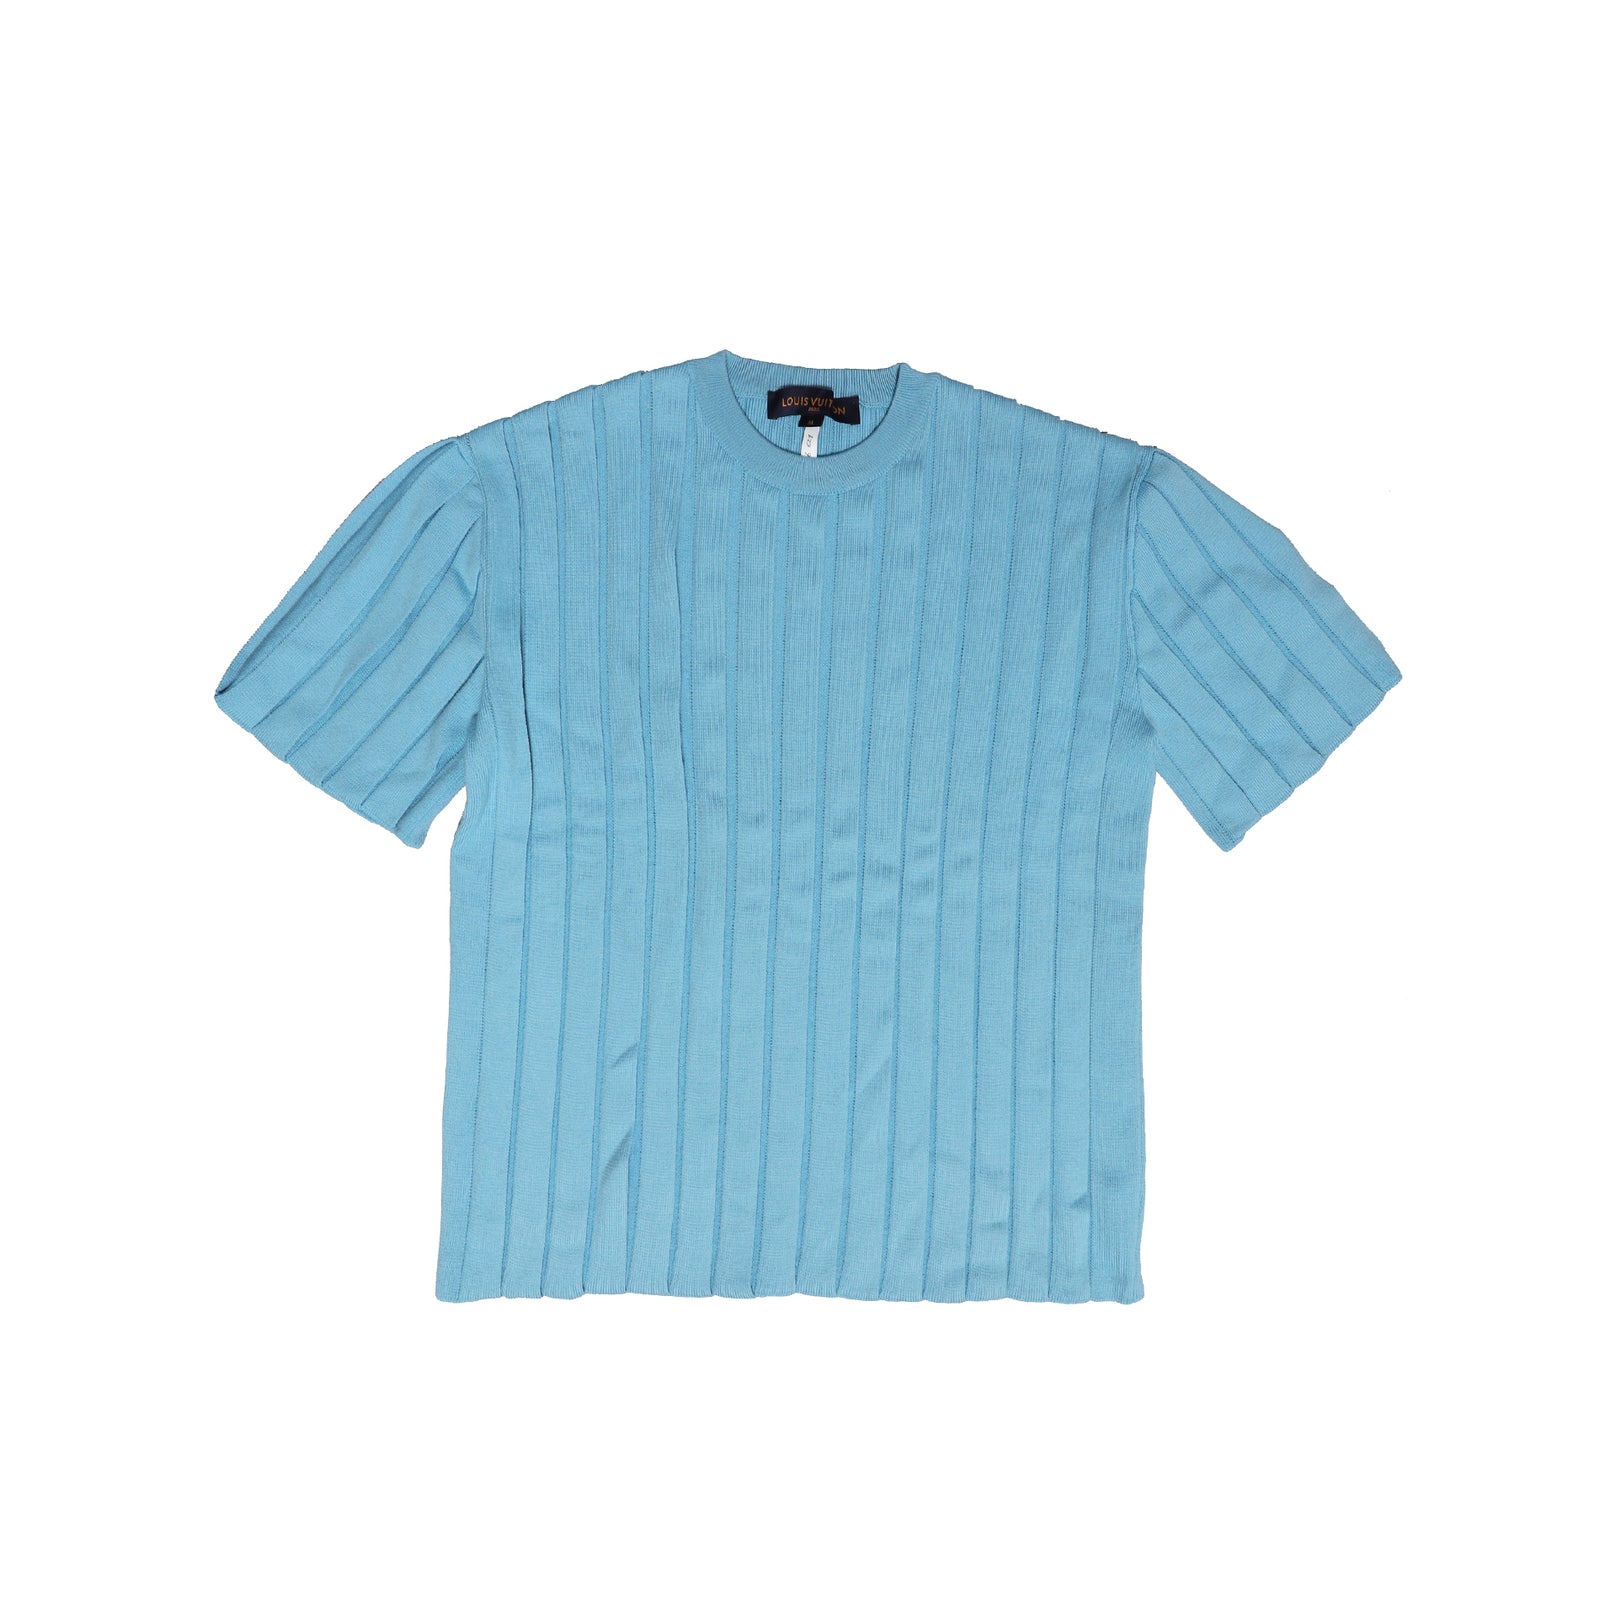 Buy Louis Vuitton Sweatshirt Watercolor Blue Logo Embroidered